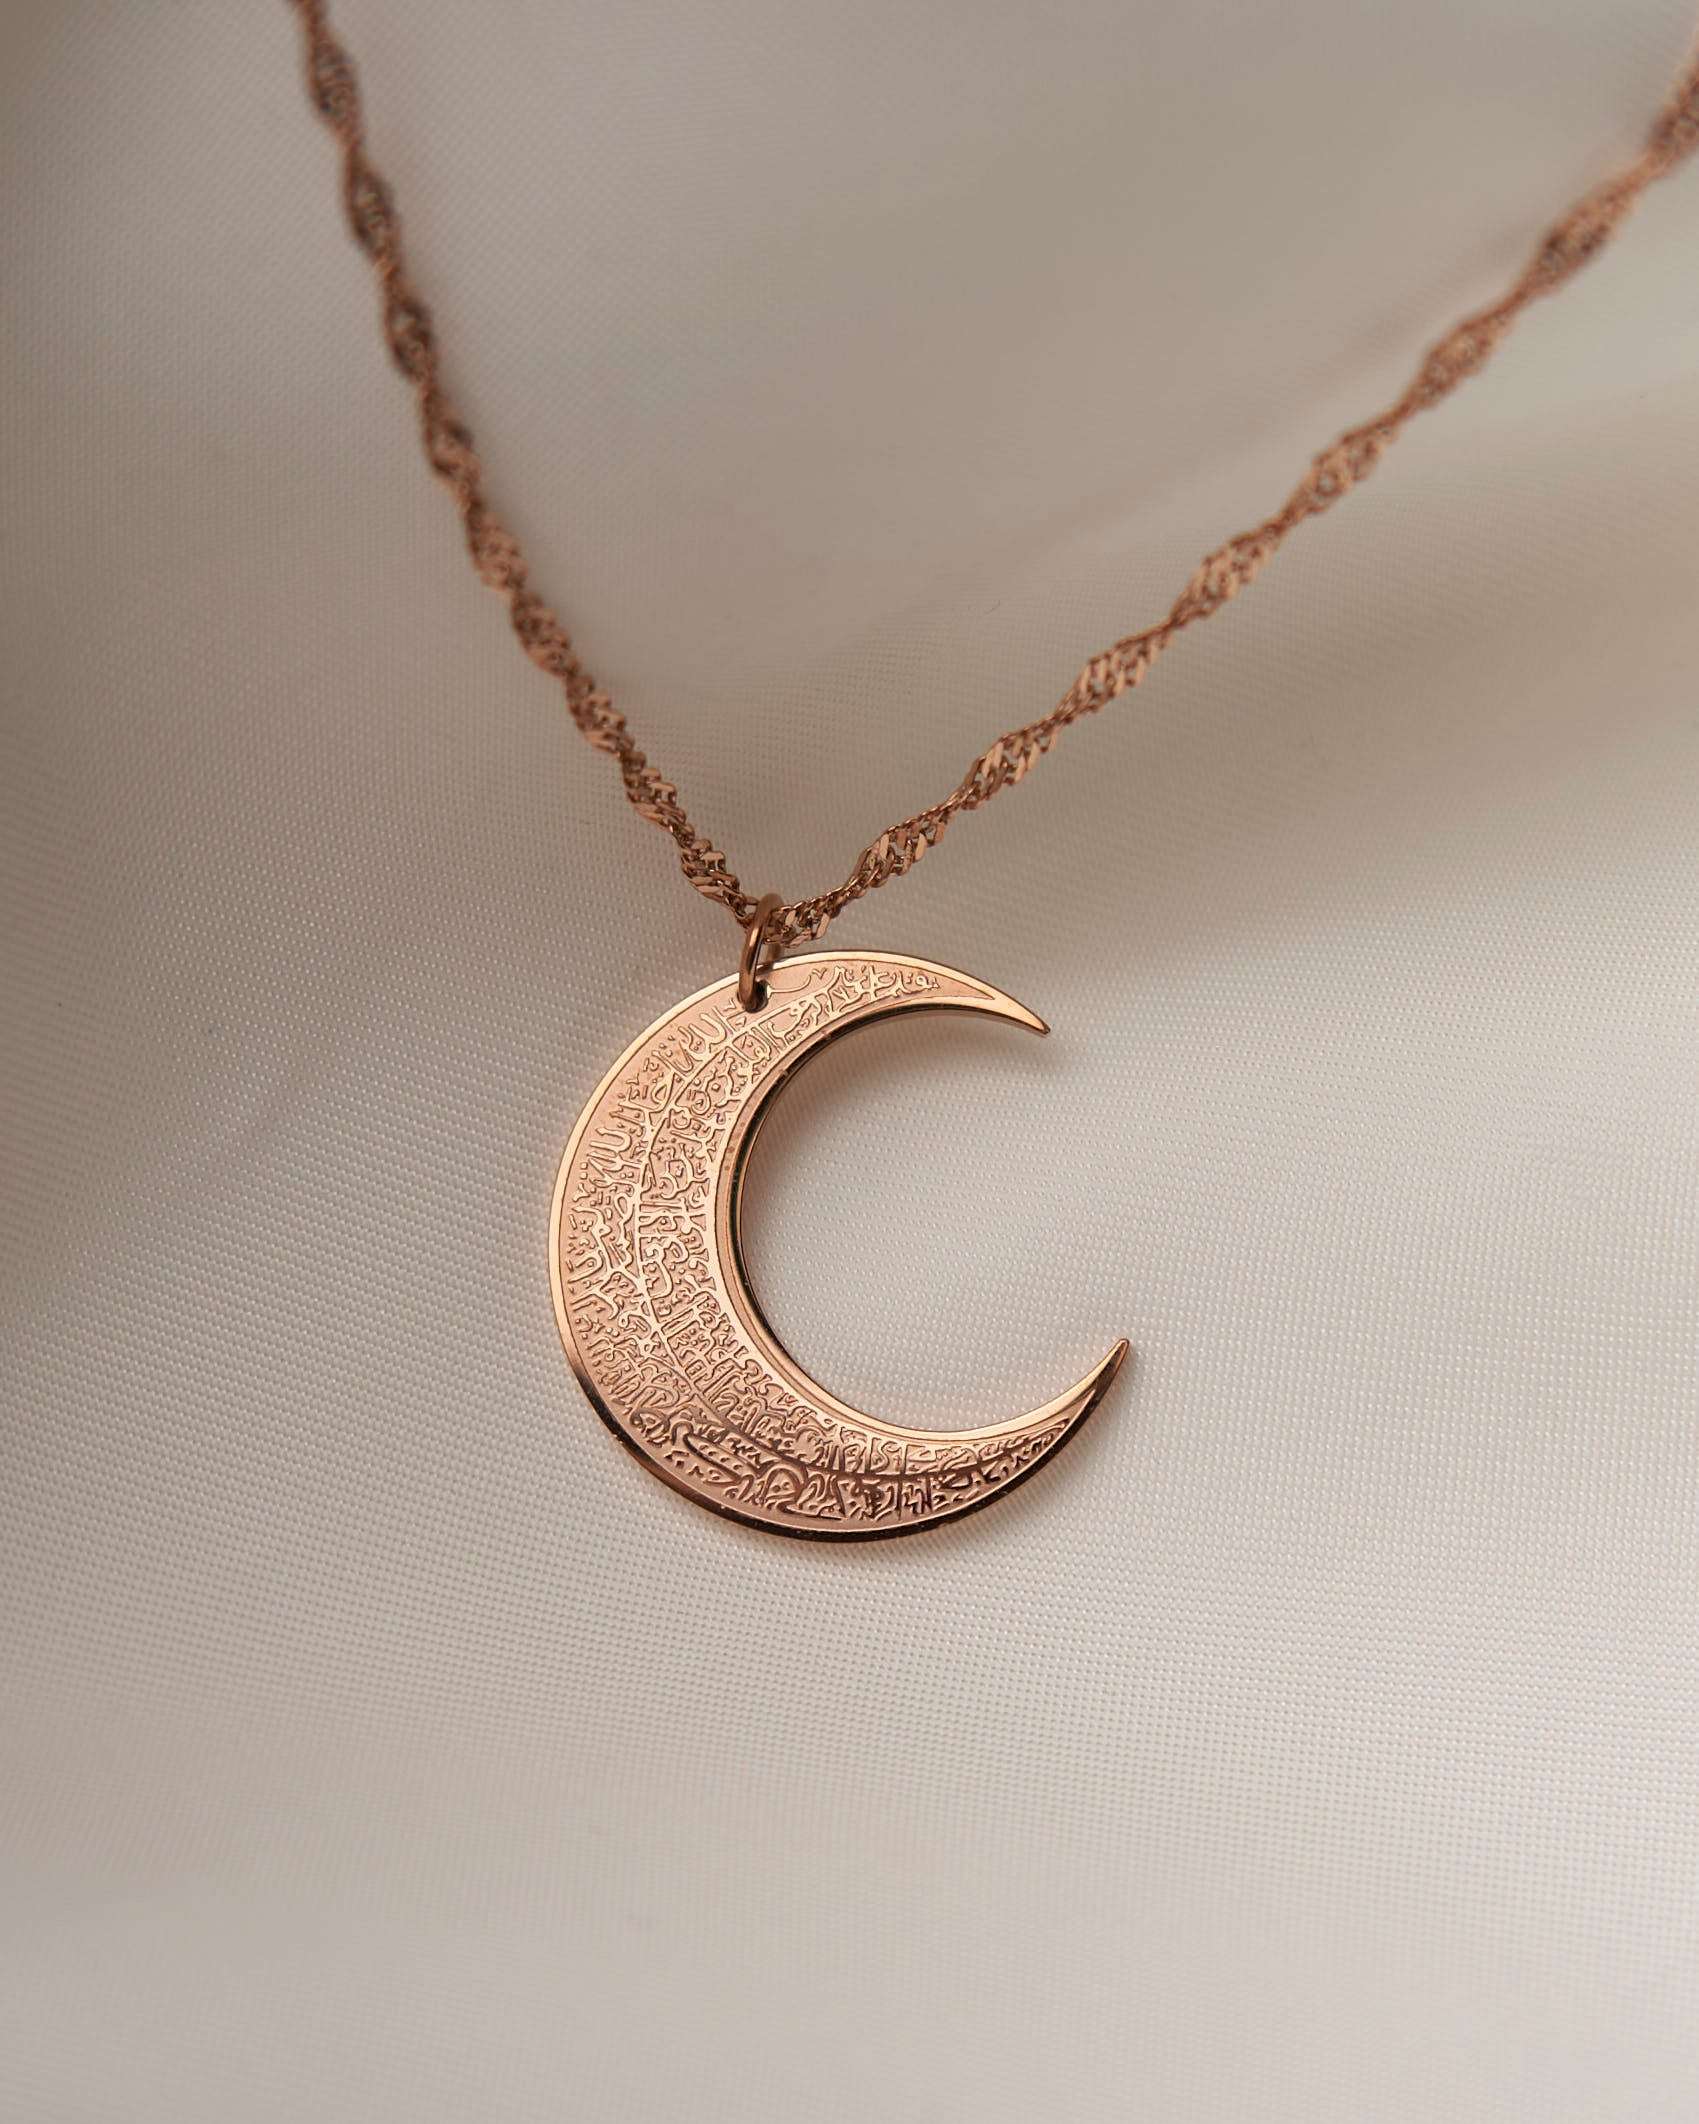 4 Qul Crescent Moon Necklace - Necklace - Fajr Noor